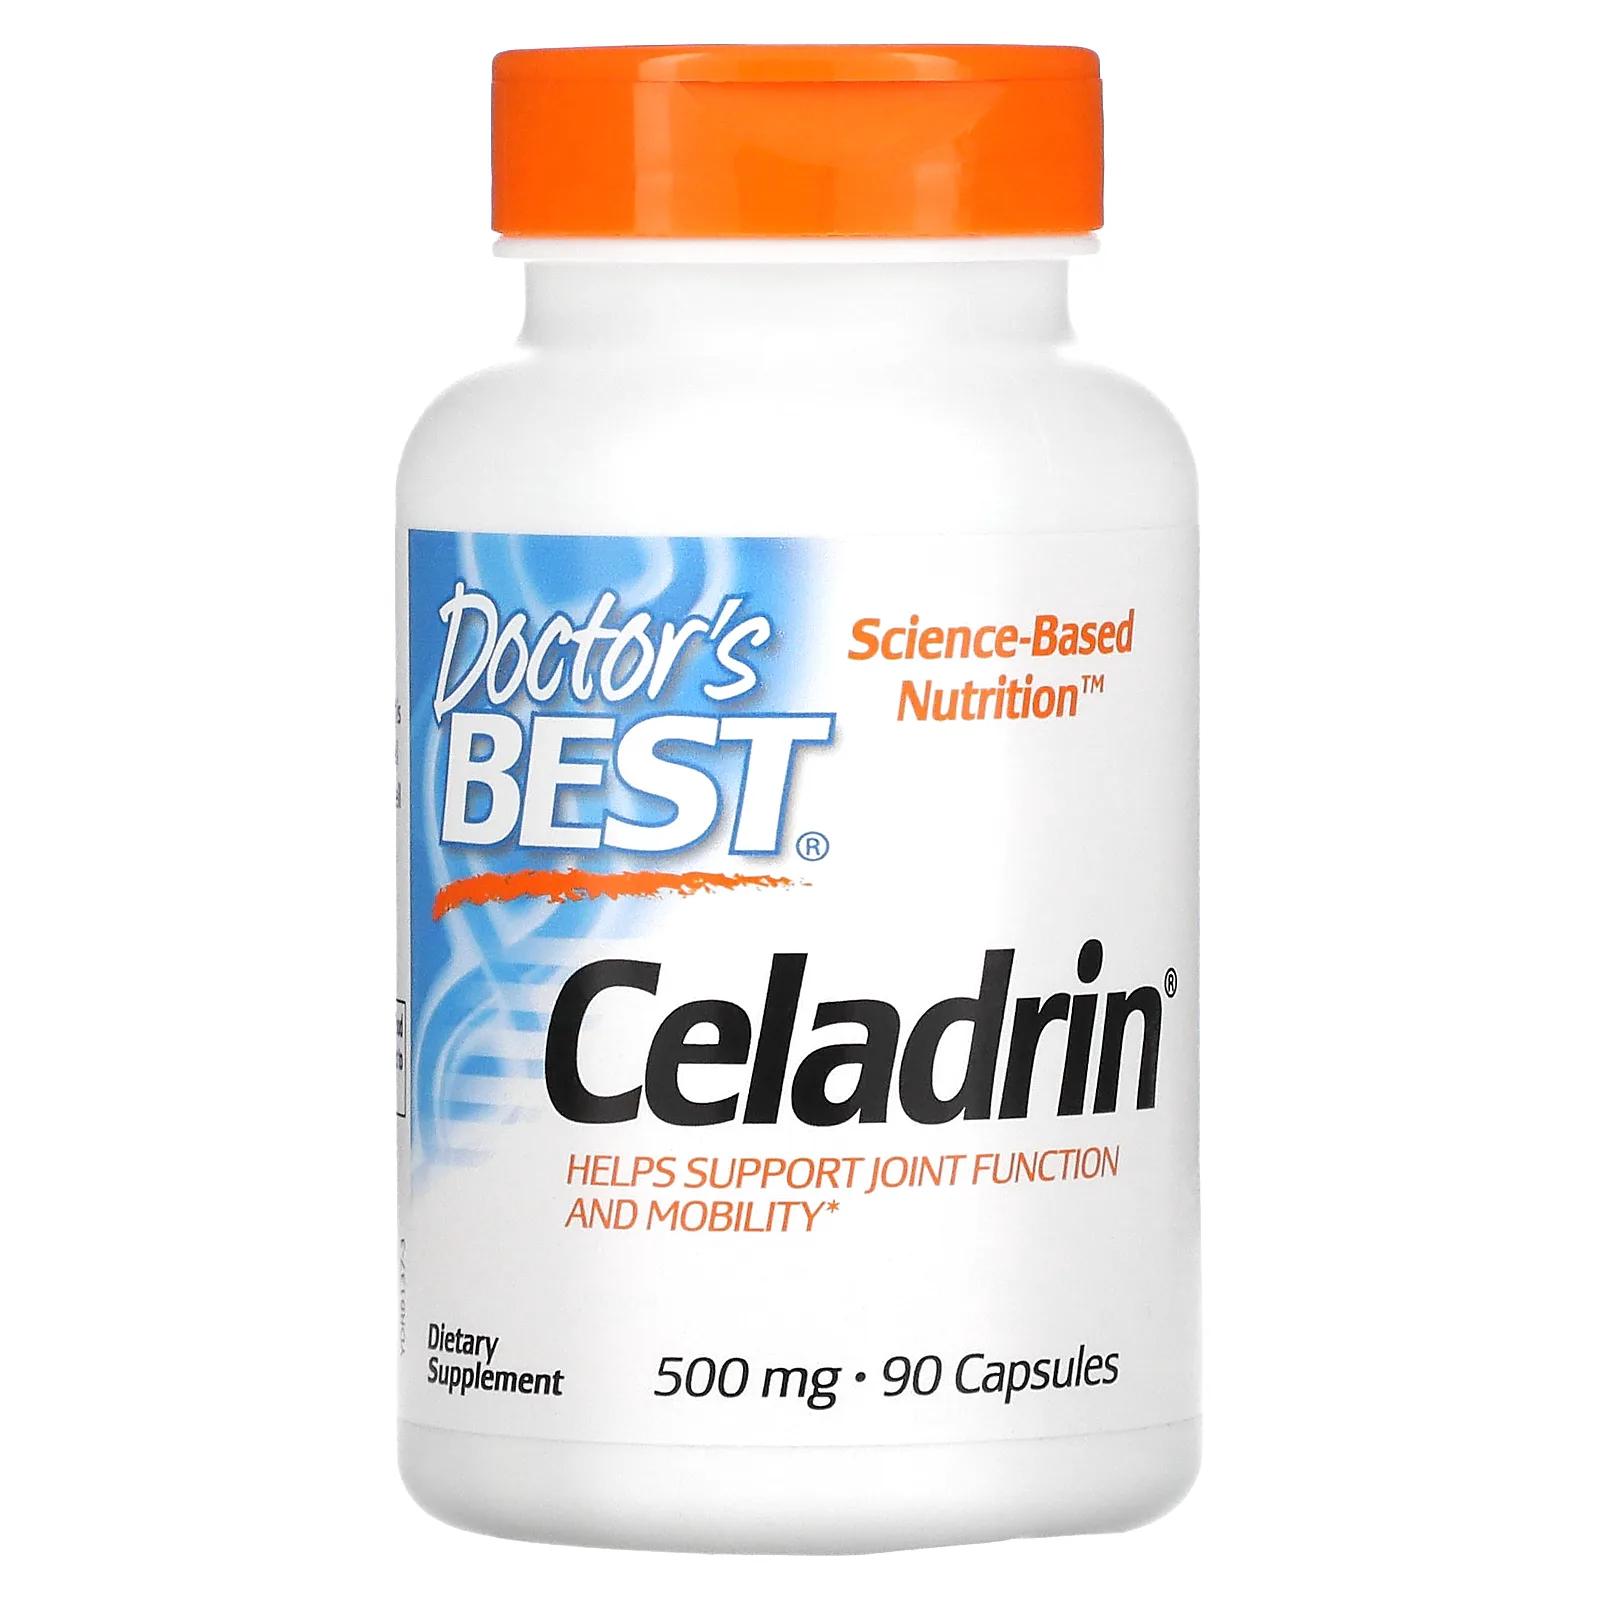 Doctor's Best Celadrin 500 мг 90 капсул celadrin doctors best 500 мг в капсулах 90 шт